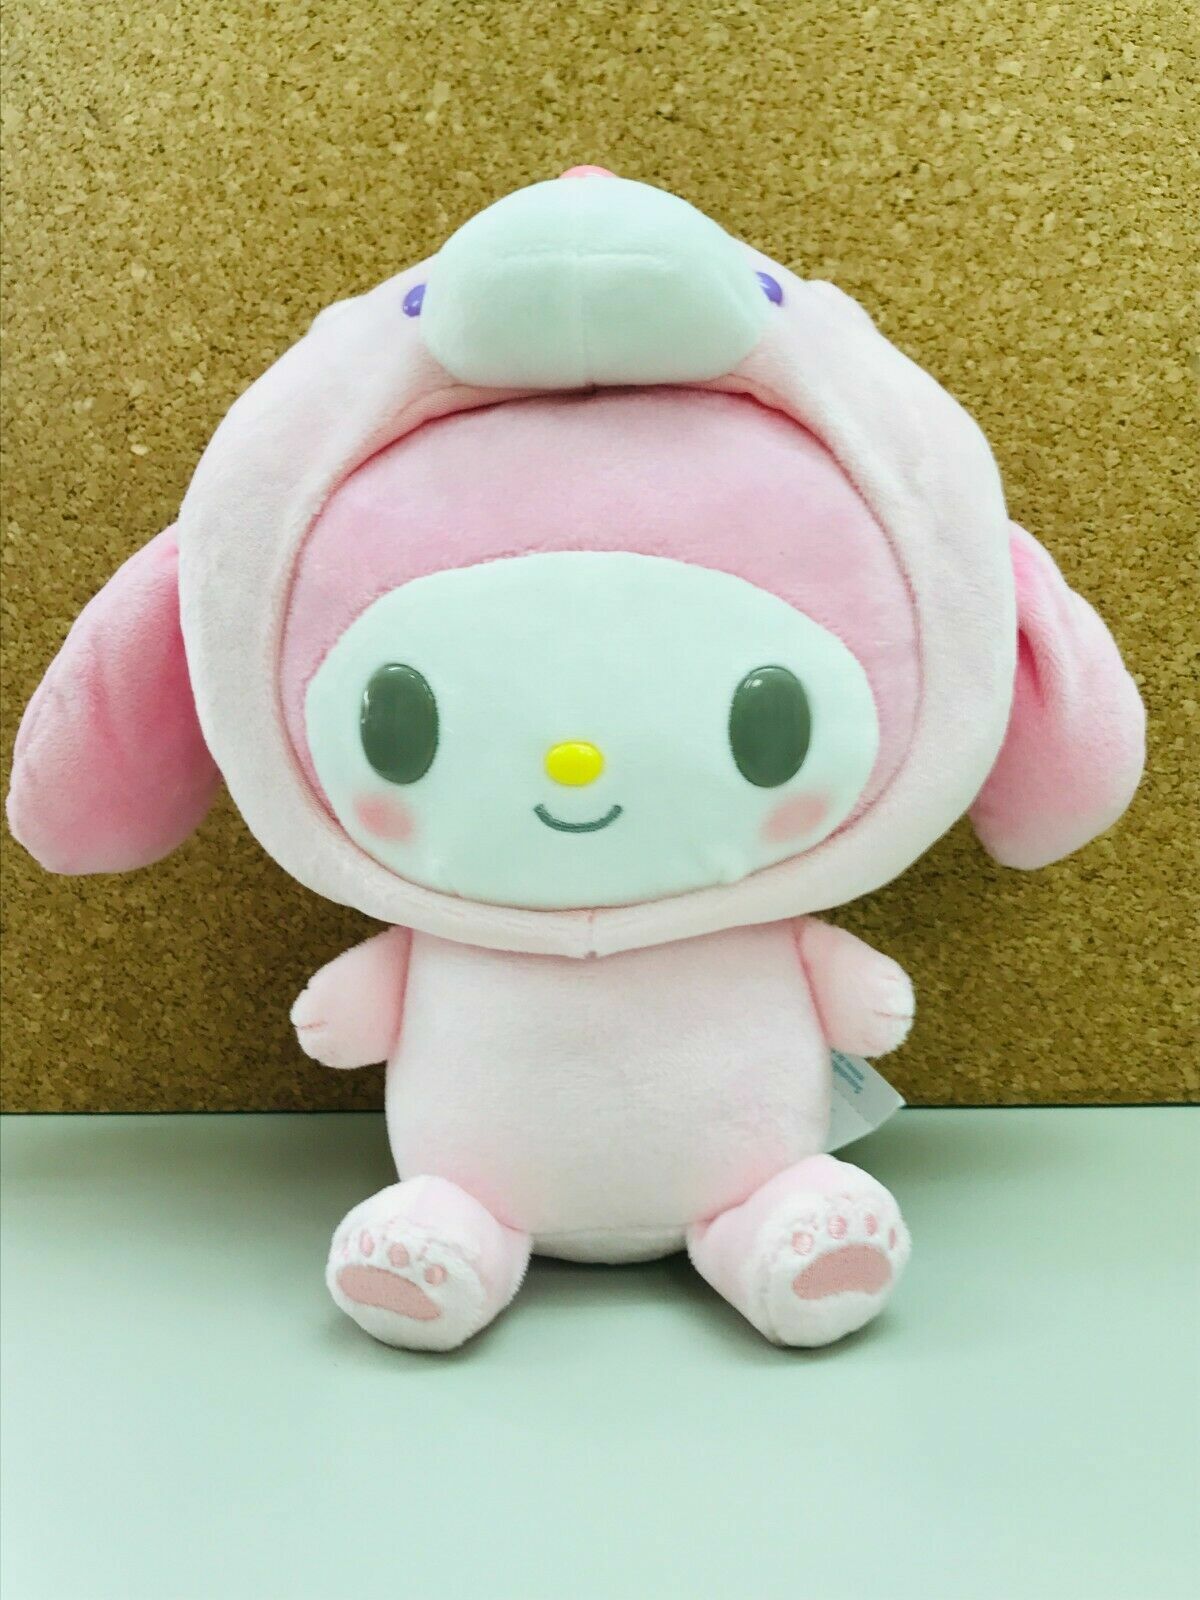 Sanrio My Melody Stuffed Toy Polar Bear Ice Friends / 24cm Hood Plush Doll Pink